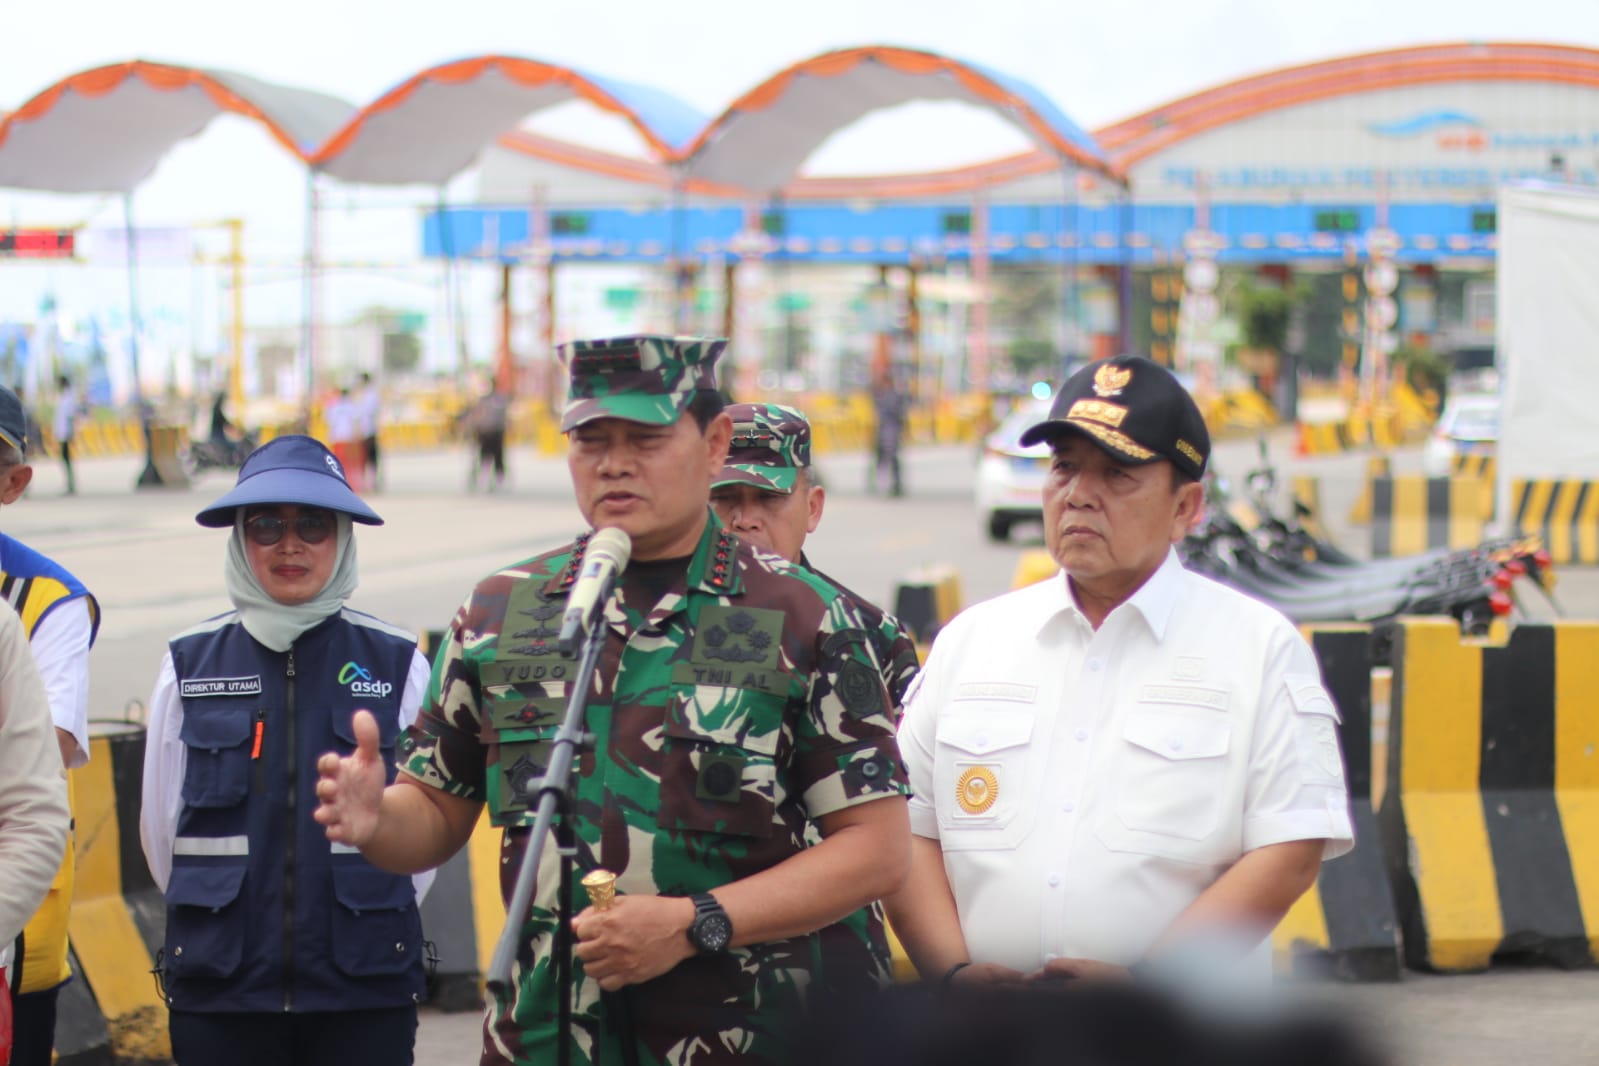 Gubernur Arinal Djunaidi Bersama Menhub, Kapolri dan Panglima TNI Pantau Arus Mudik Di Pelabuhan Bakauheni